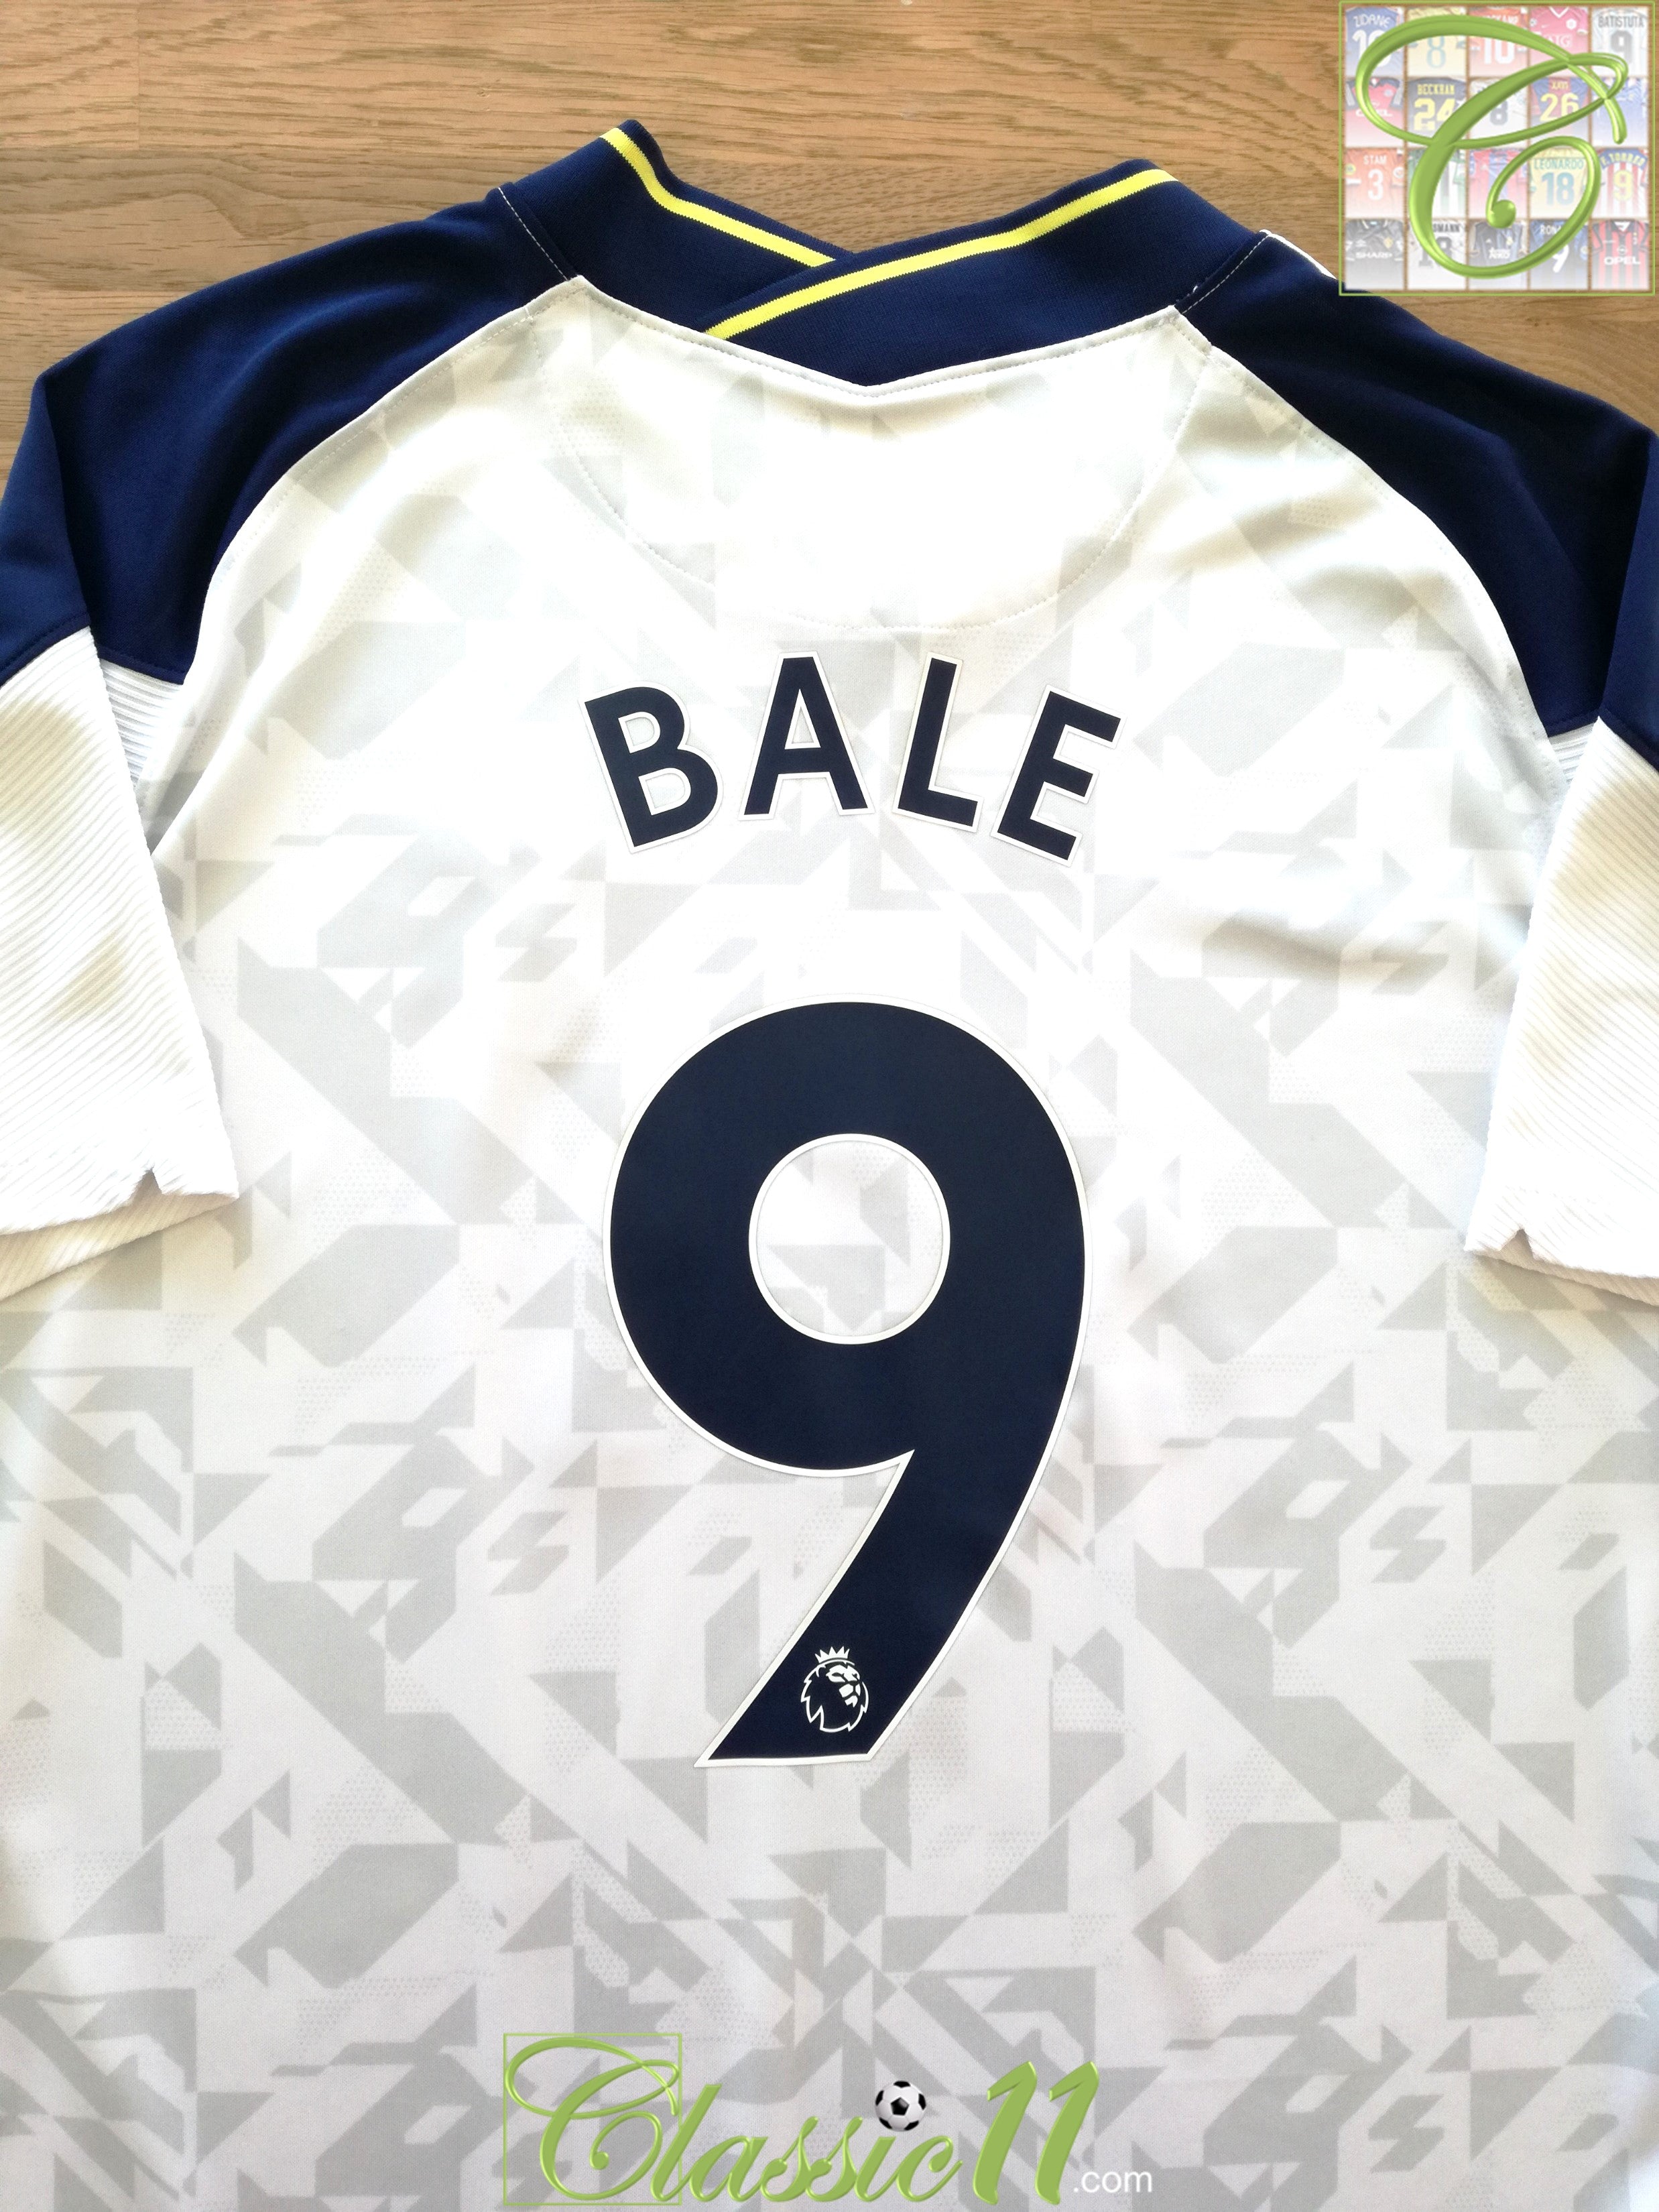 Official Tottenham Hotspur 2020-2021 Home Kit jersey Gareth Bale